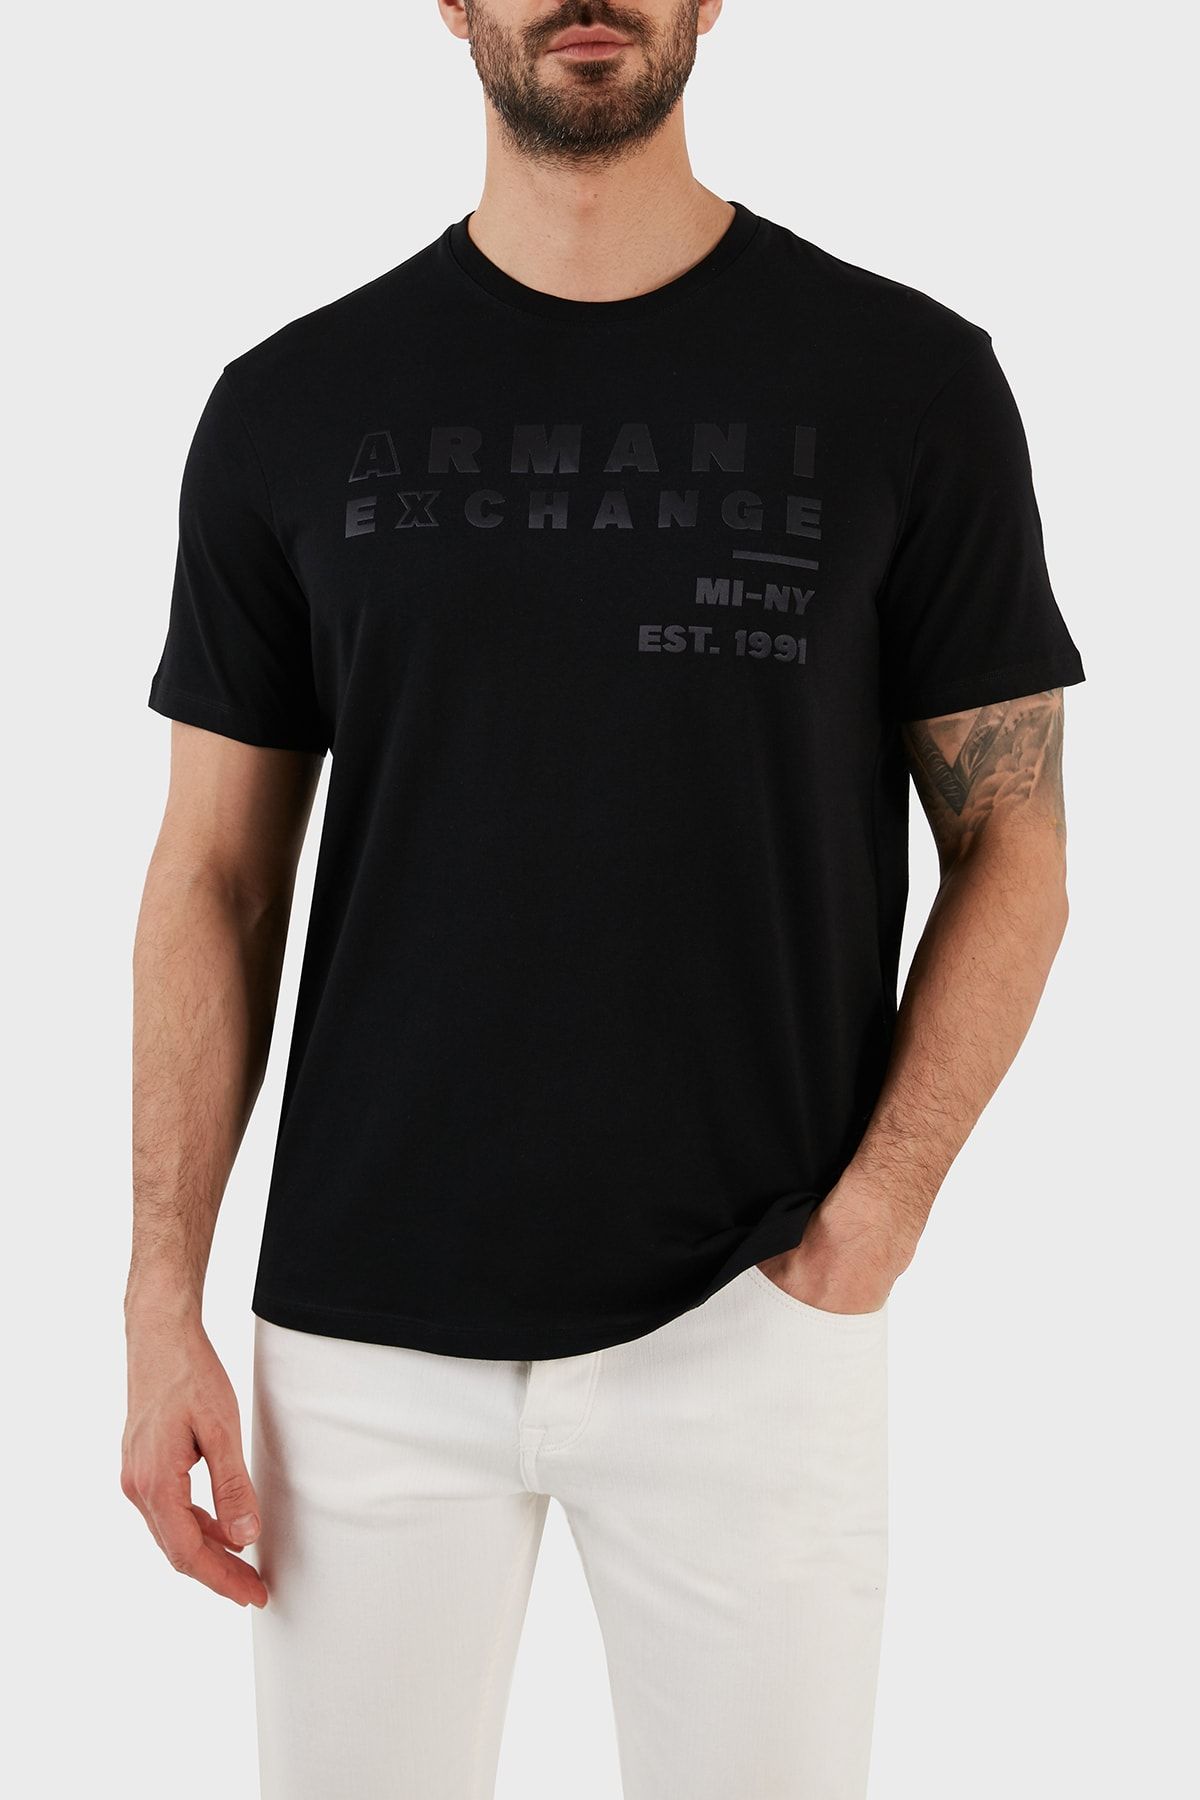 Armani Exchange Logo Baskılı Bisiklet Yaka % 100 Pamuk Regular Fit T Shirt Erkek T Shirt 3rztca Zj3v